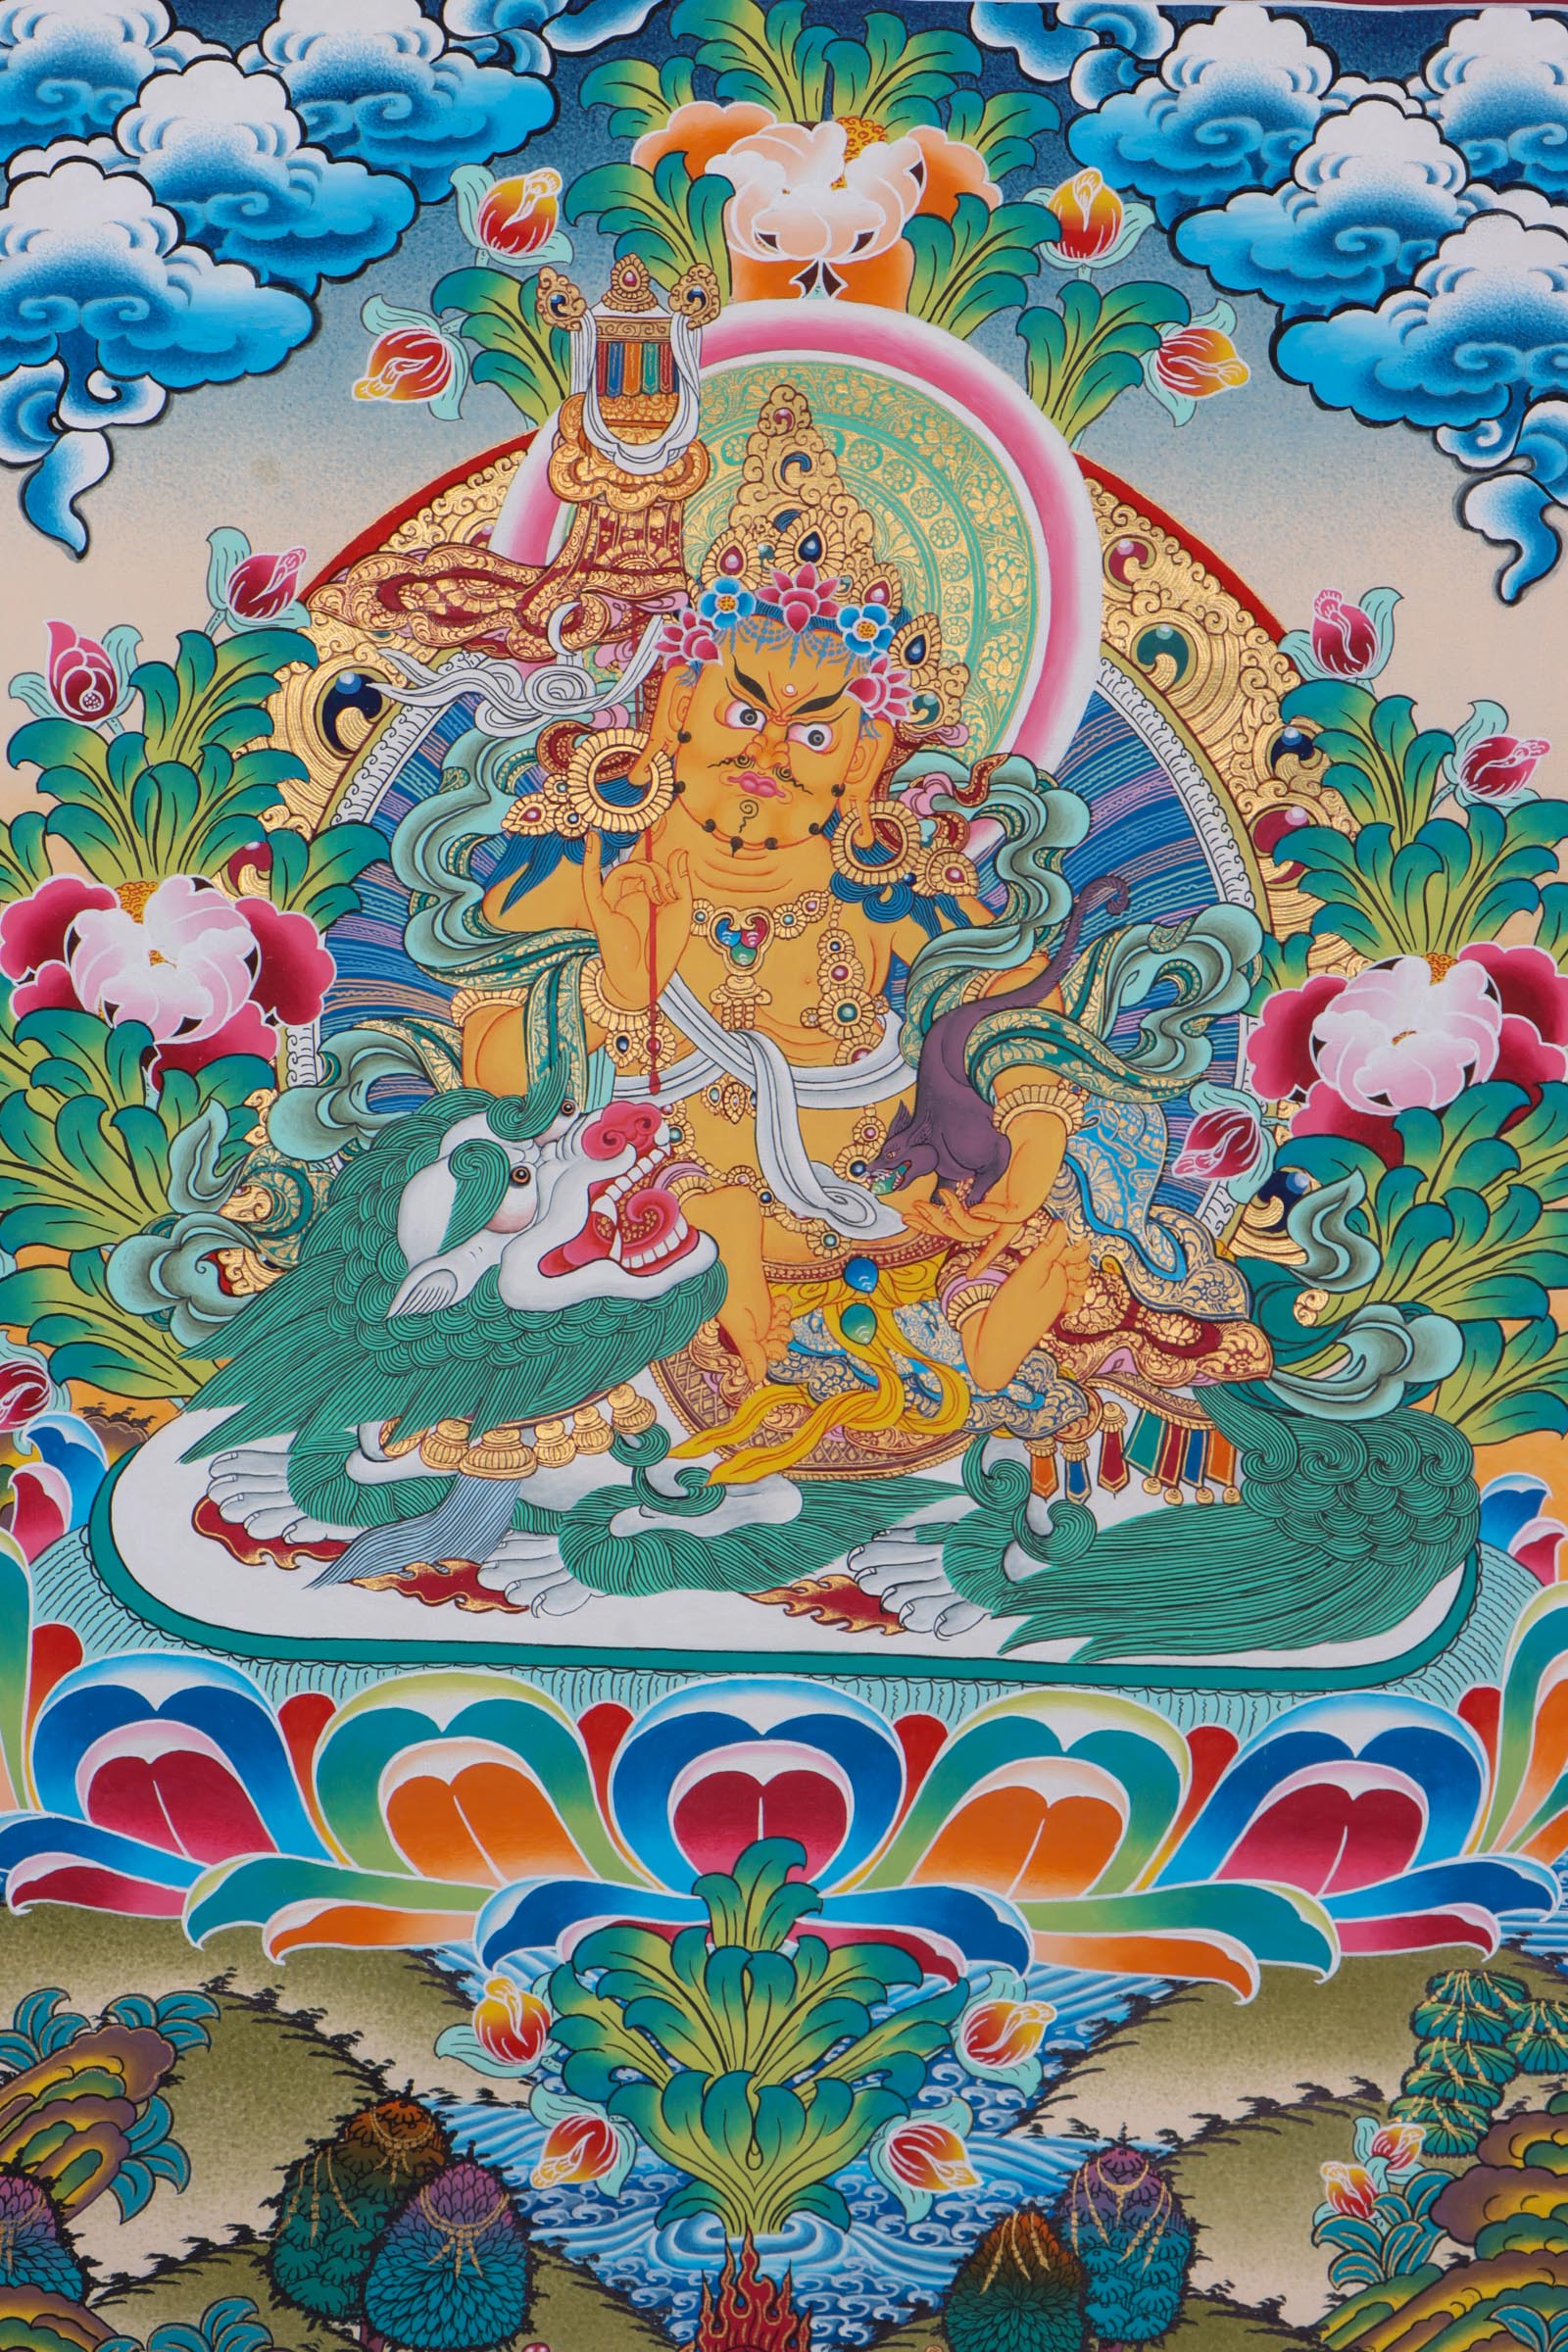 Zambala a wrathful deity of Tibetan Buddhism Thangka art for prosperity and abundance